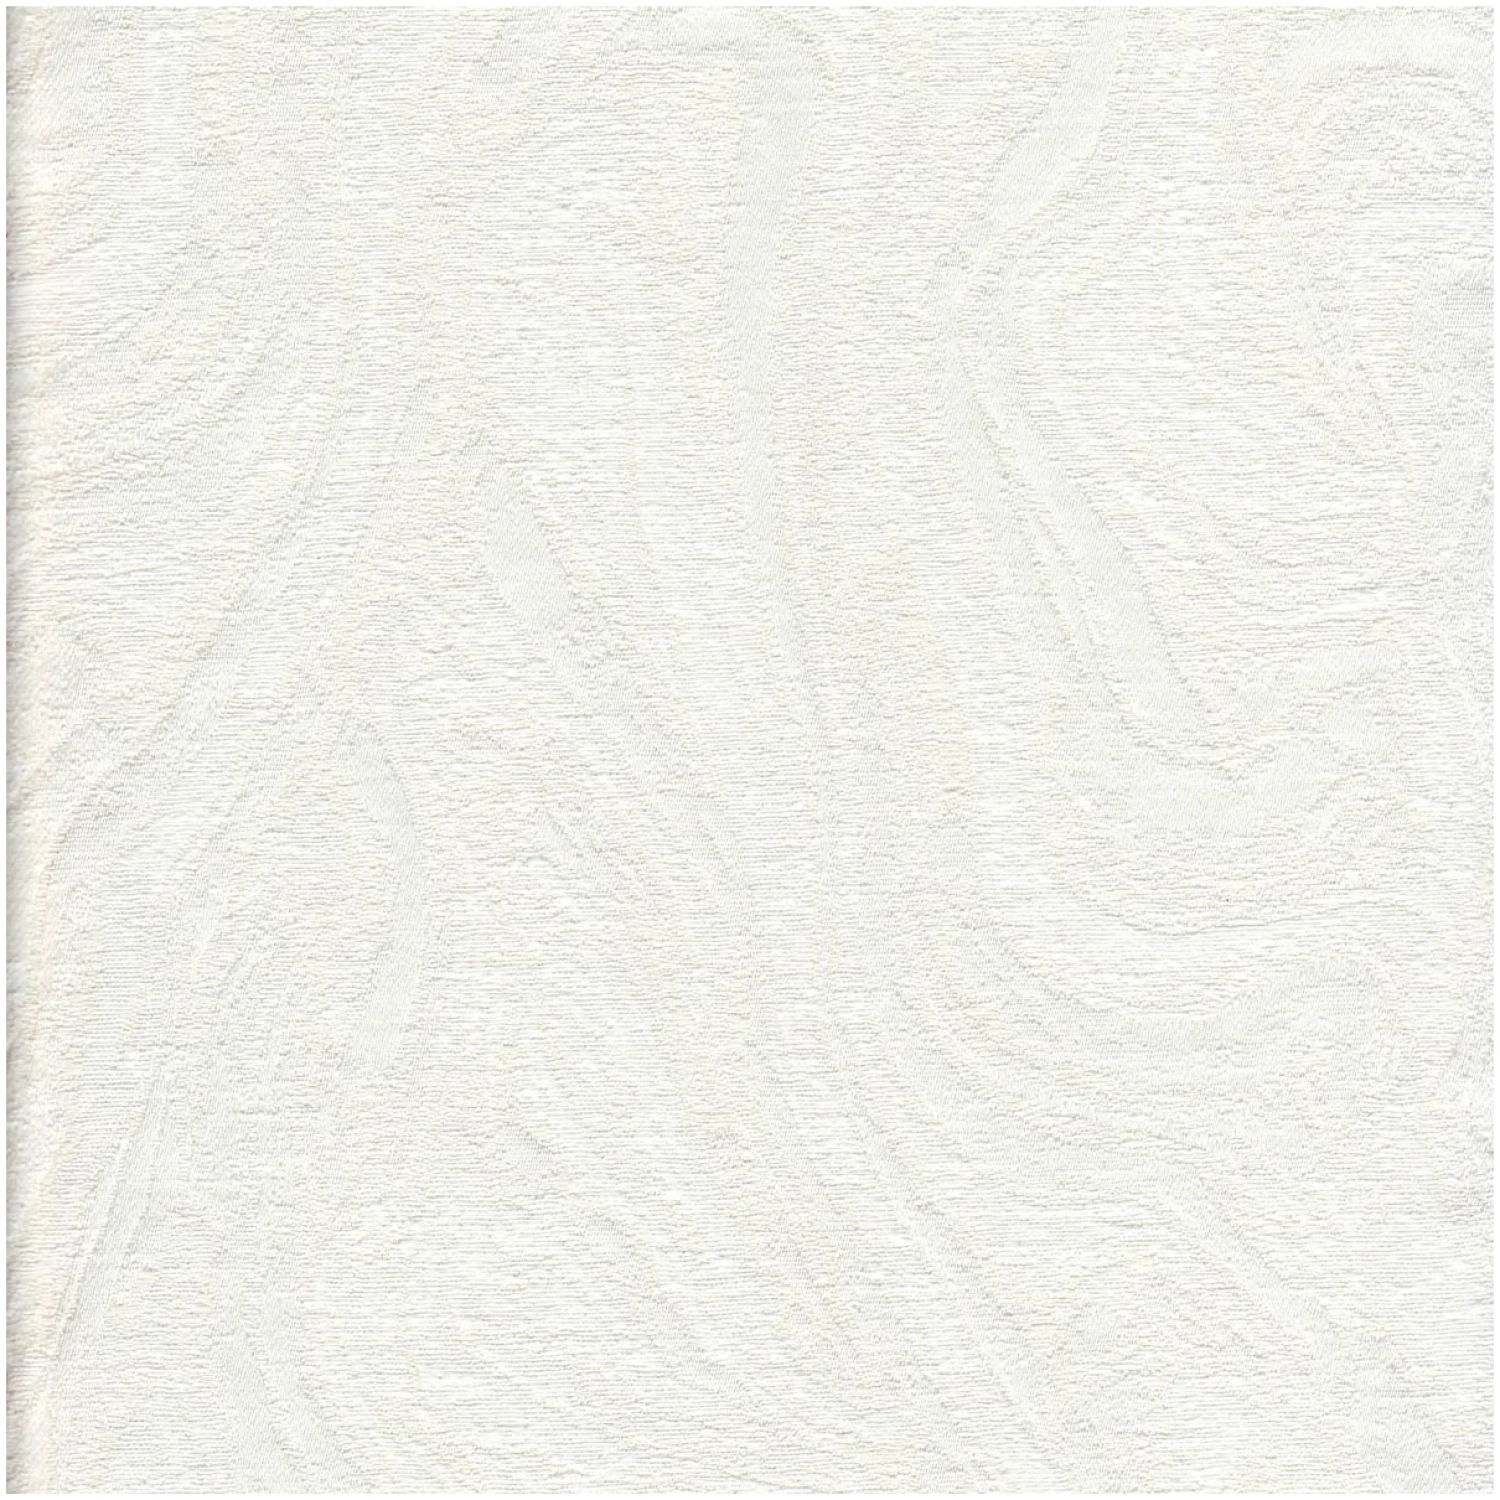 Amarble/White - Multi Purpose Fabric Suitable For Drapery